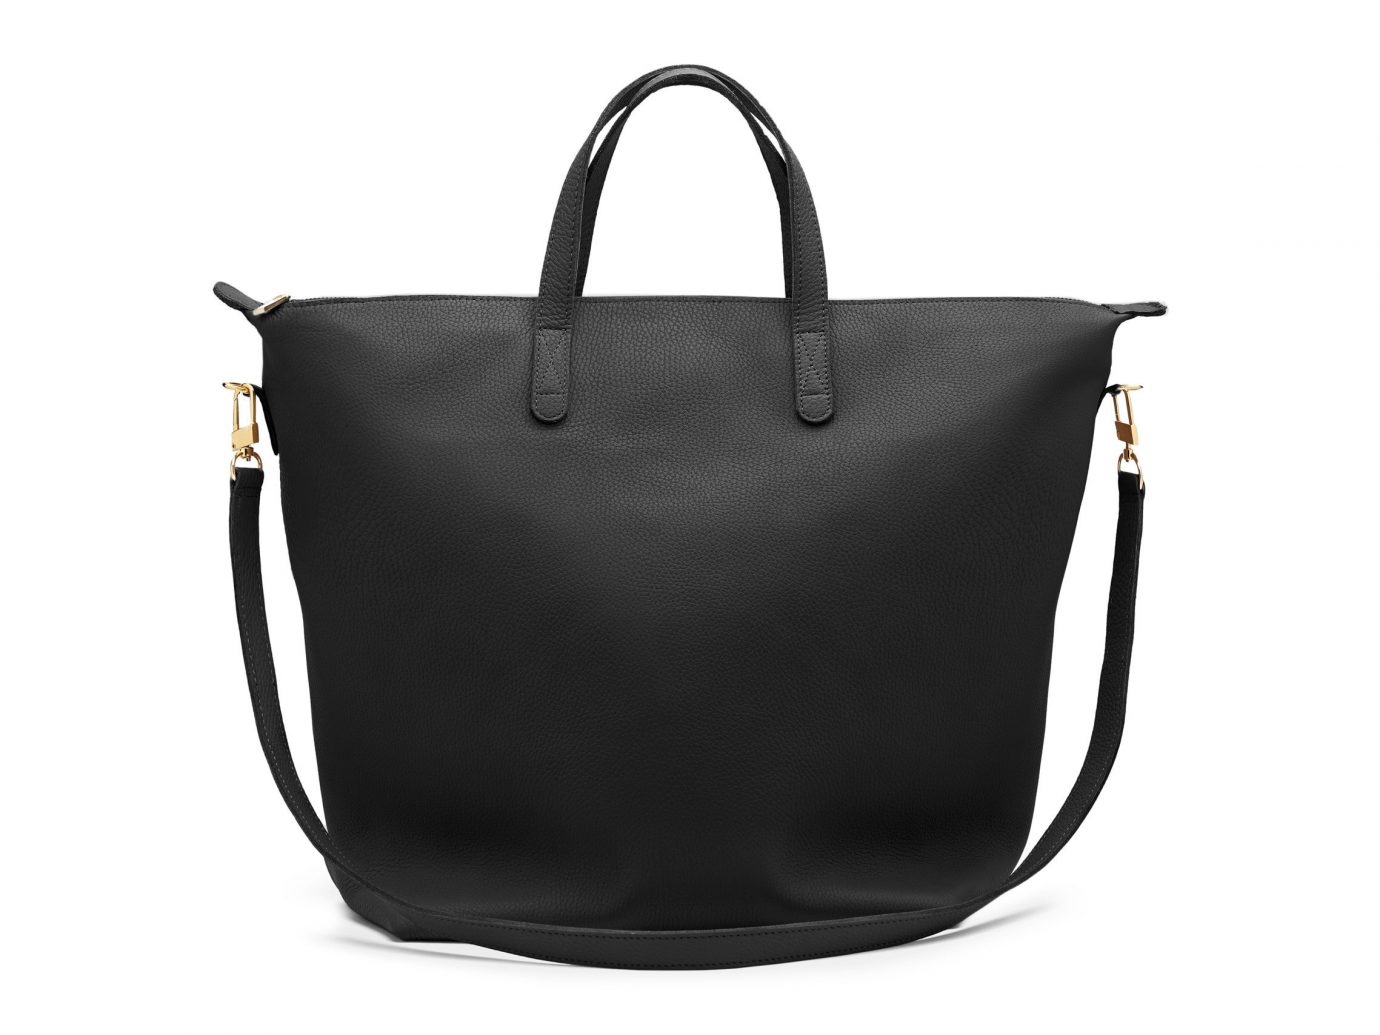 Style + Design bag black handbag accessory fashion accessory indoor leather shoulder bag product tote bag product design brand luggage & bags baggage case